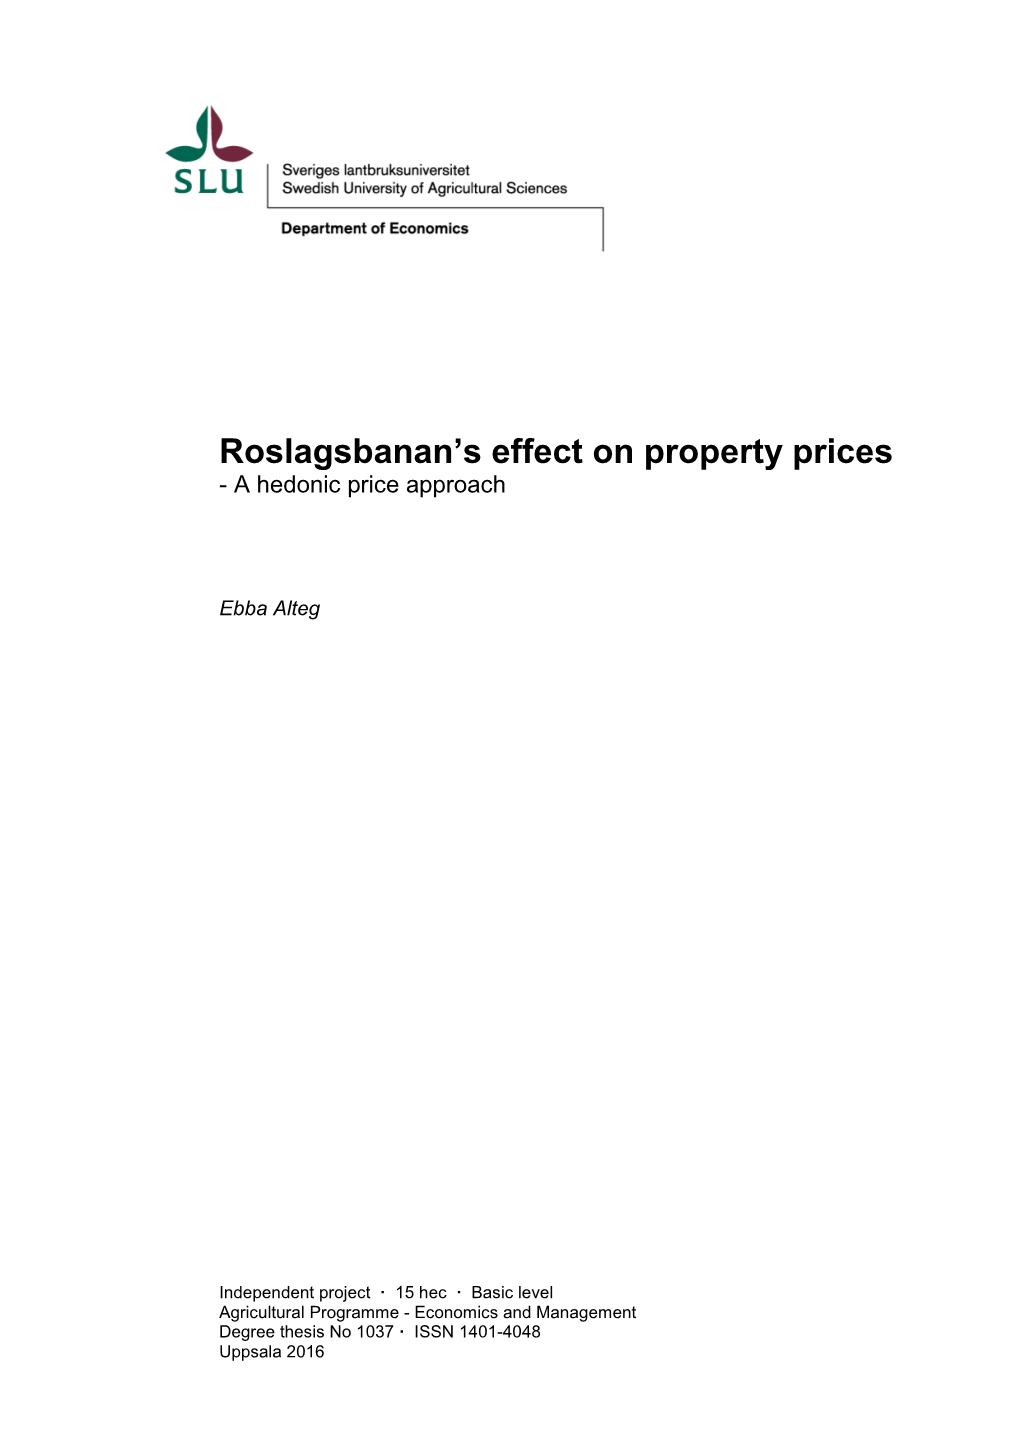 Roslagsbanan's Effect on Property Prices